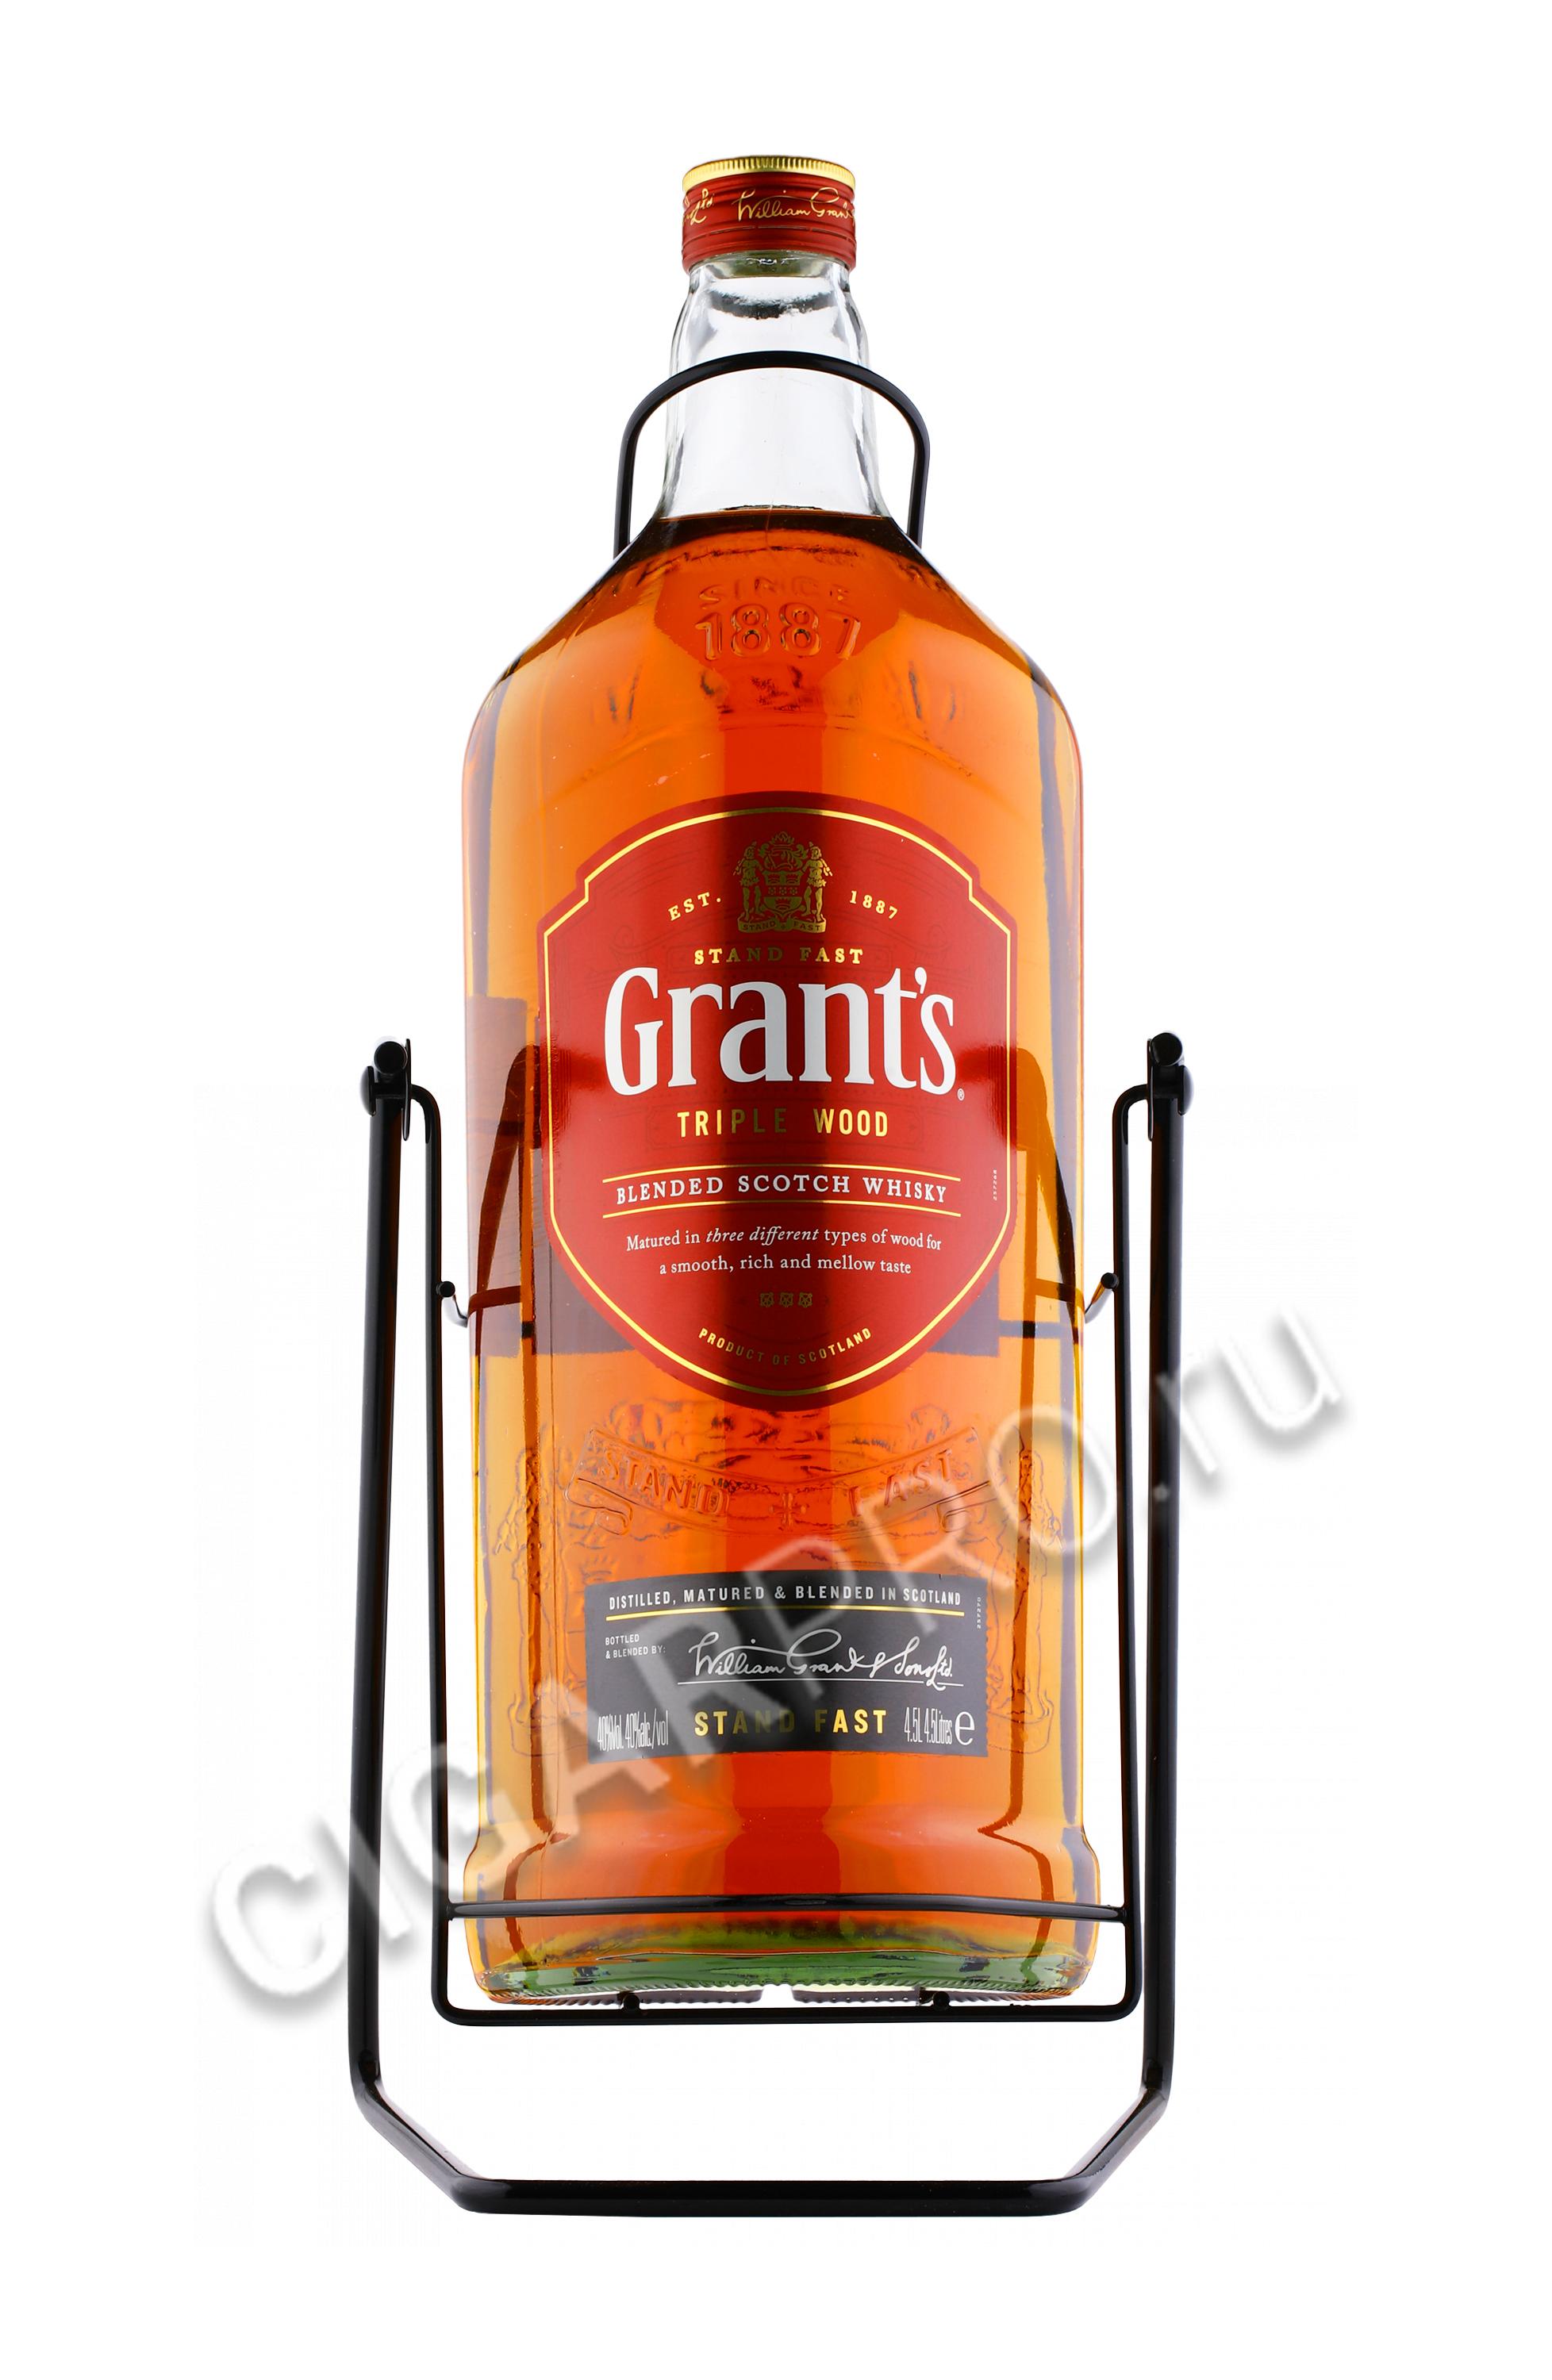 Grants 4 5. Грантс трипл Вуд 4,5 качели. Виски Грантс трипл Вуд 3 года 0,5л. Виски Грант трипс Вуд 3 года 40% 0,5. Виски Грантс 4.5 на качелях.